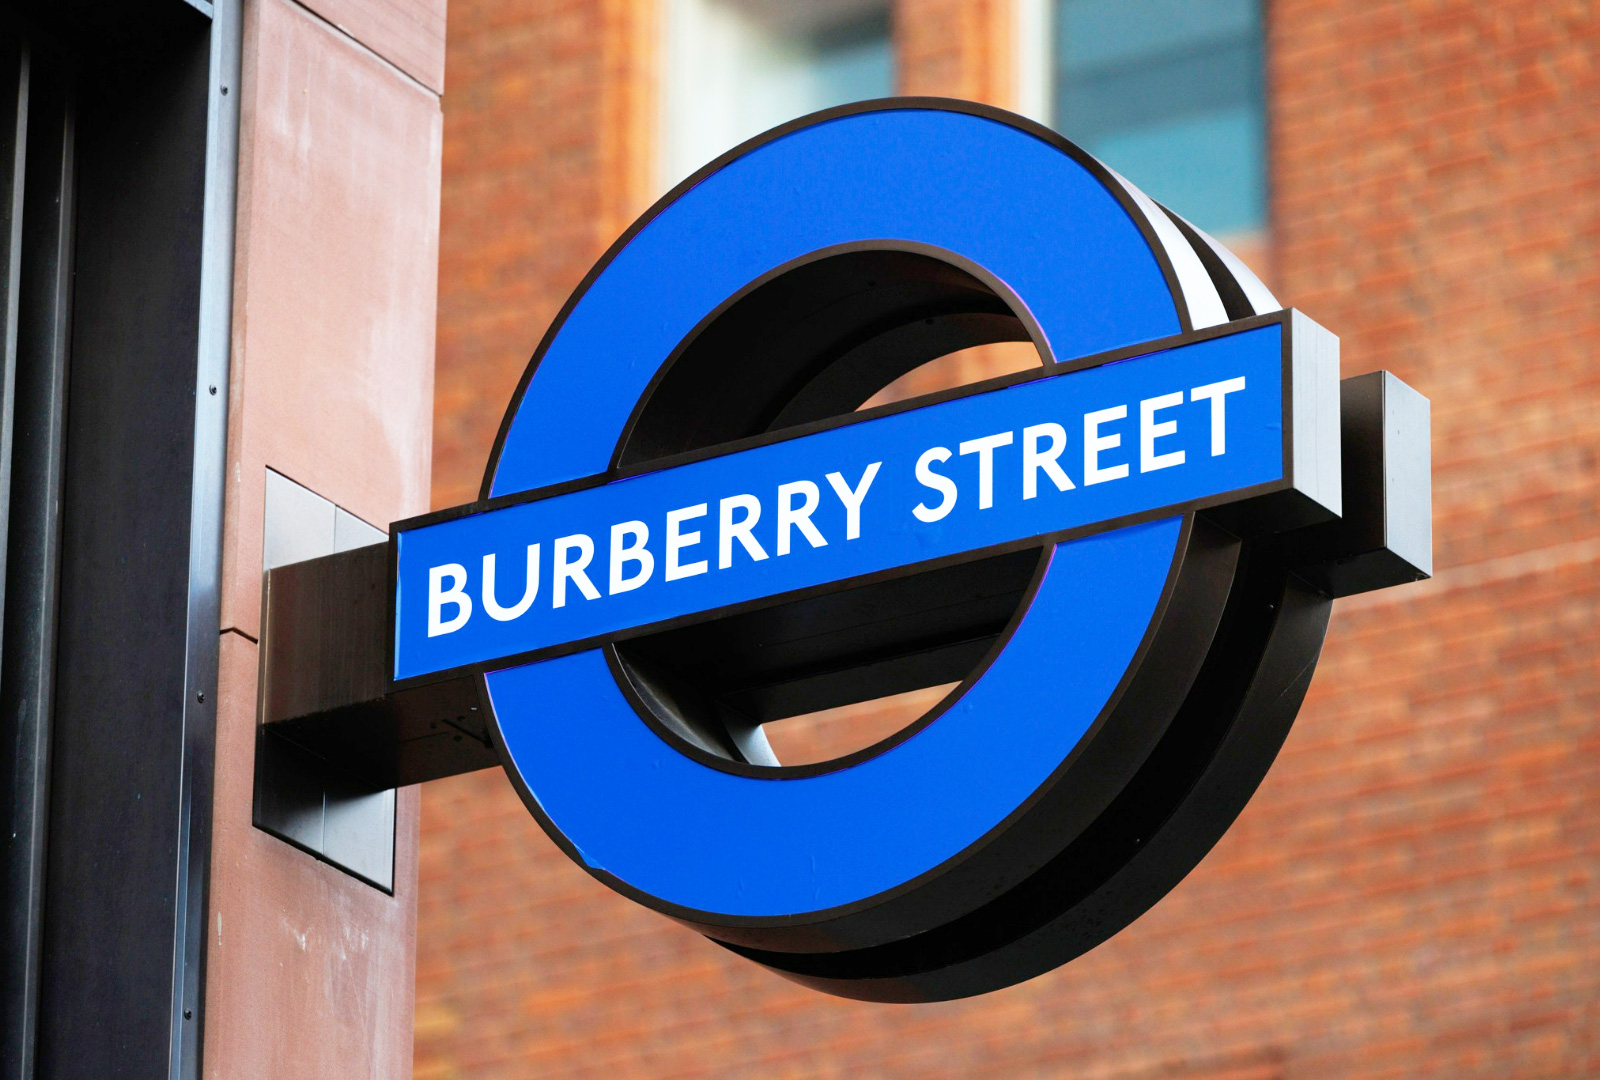 Burberry Street roundel at Bond Street Station